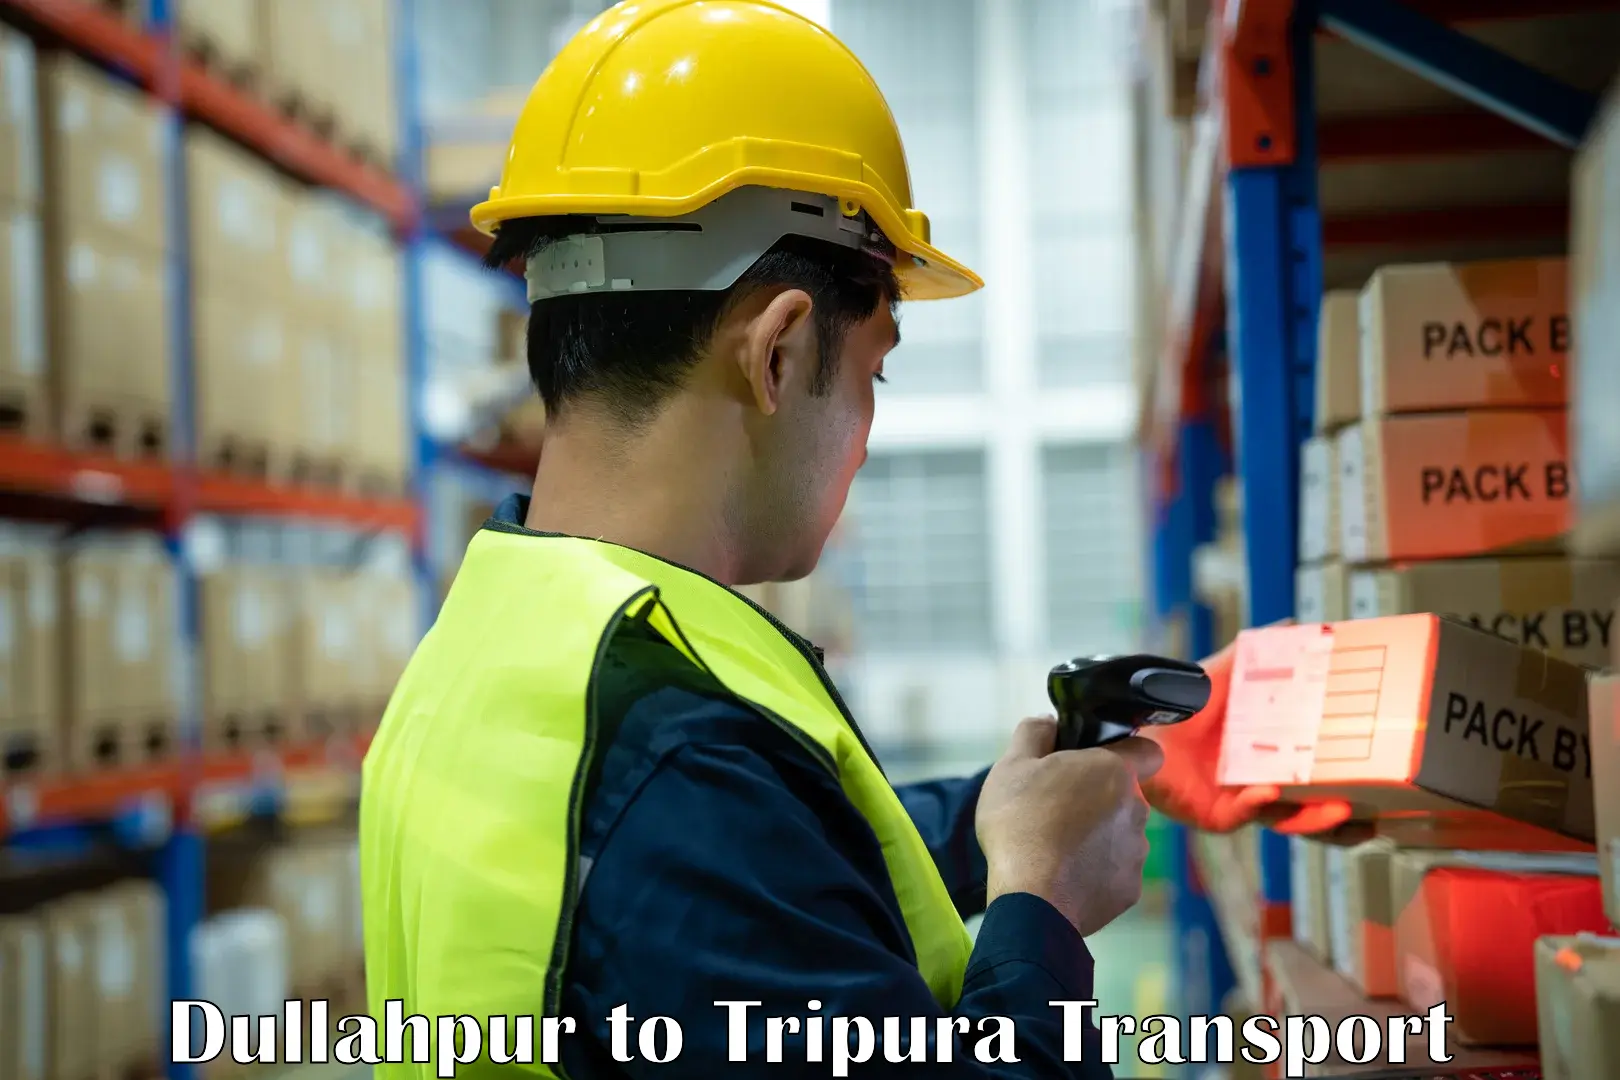 Door to door transport services Dullahpur to Udaipur Tripura